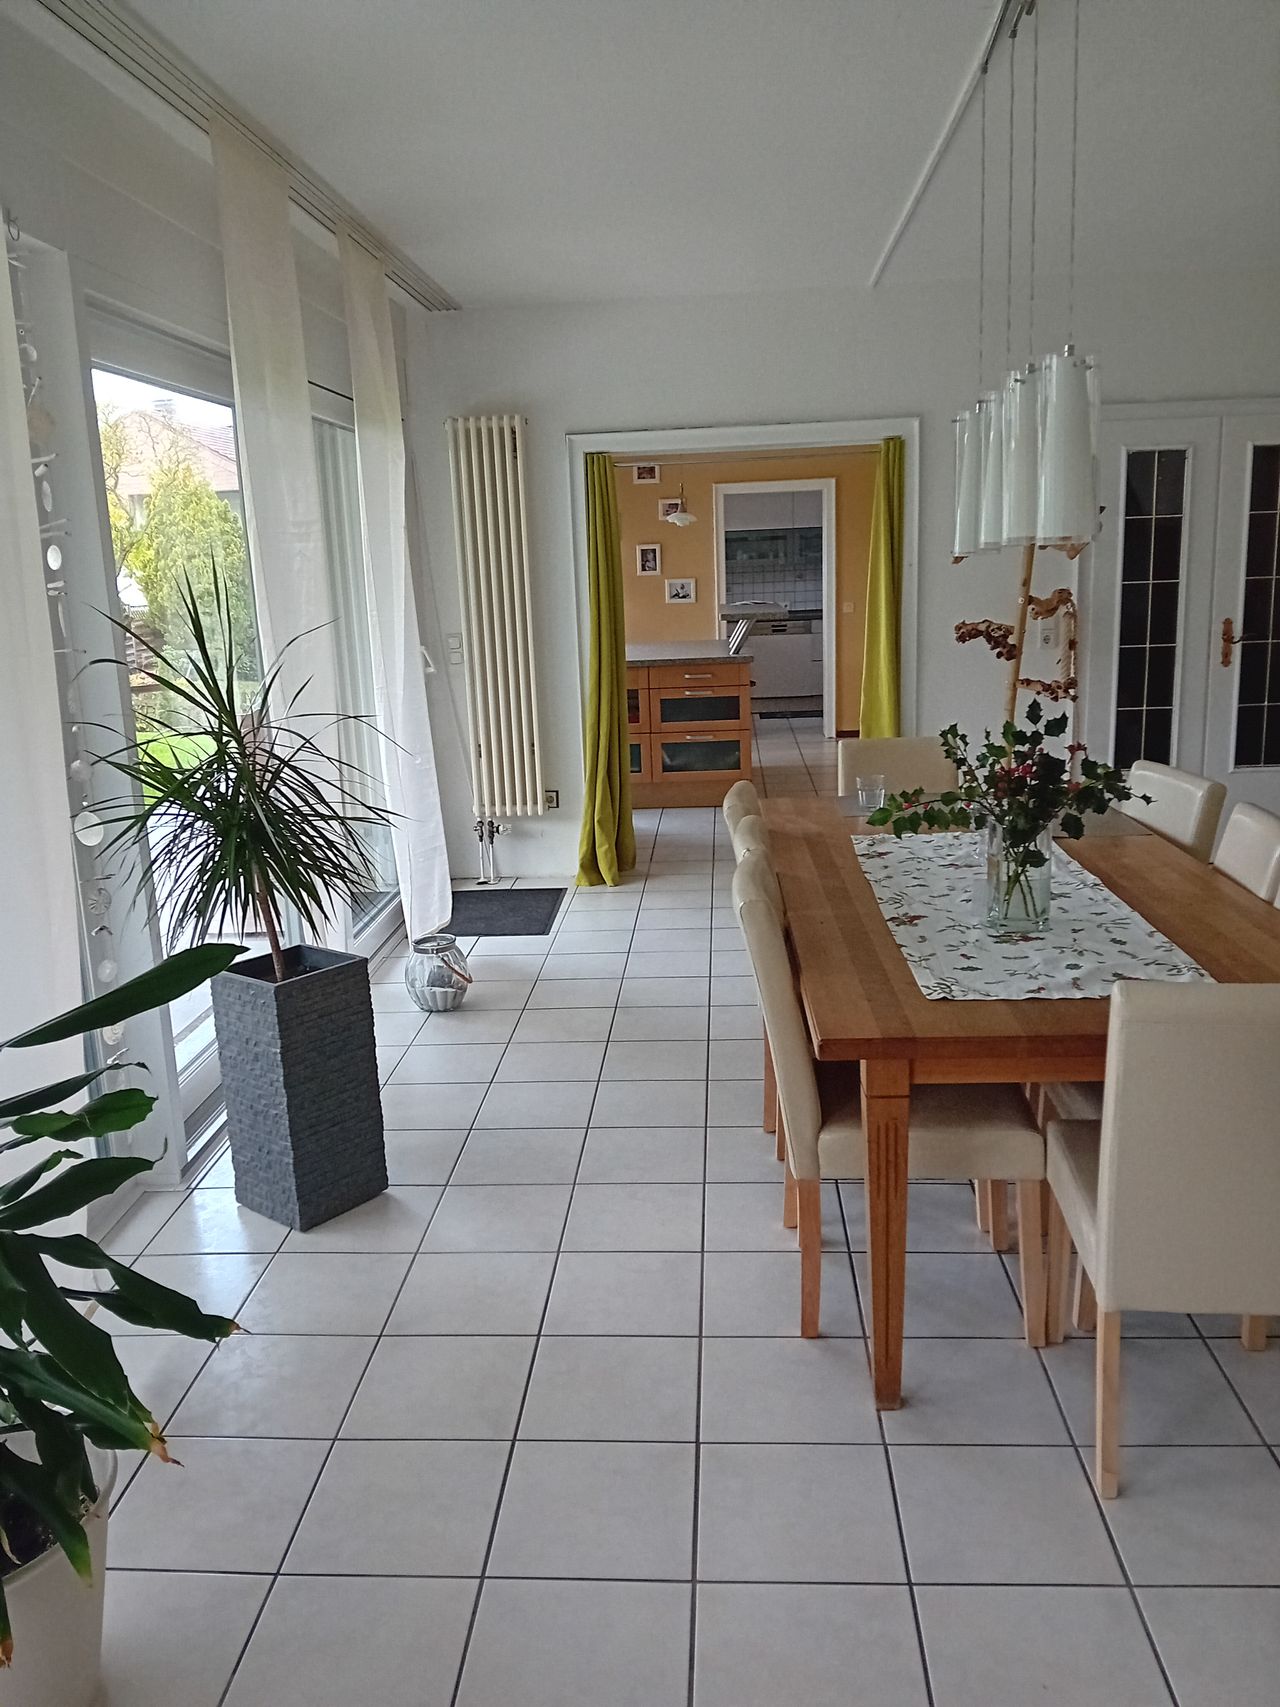 Perfect & new home in Iserlohn